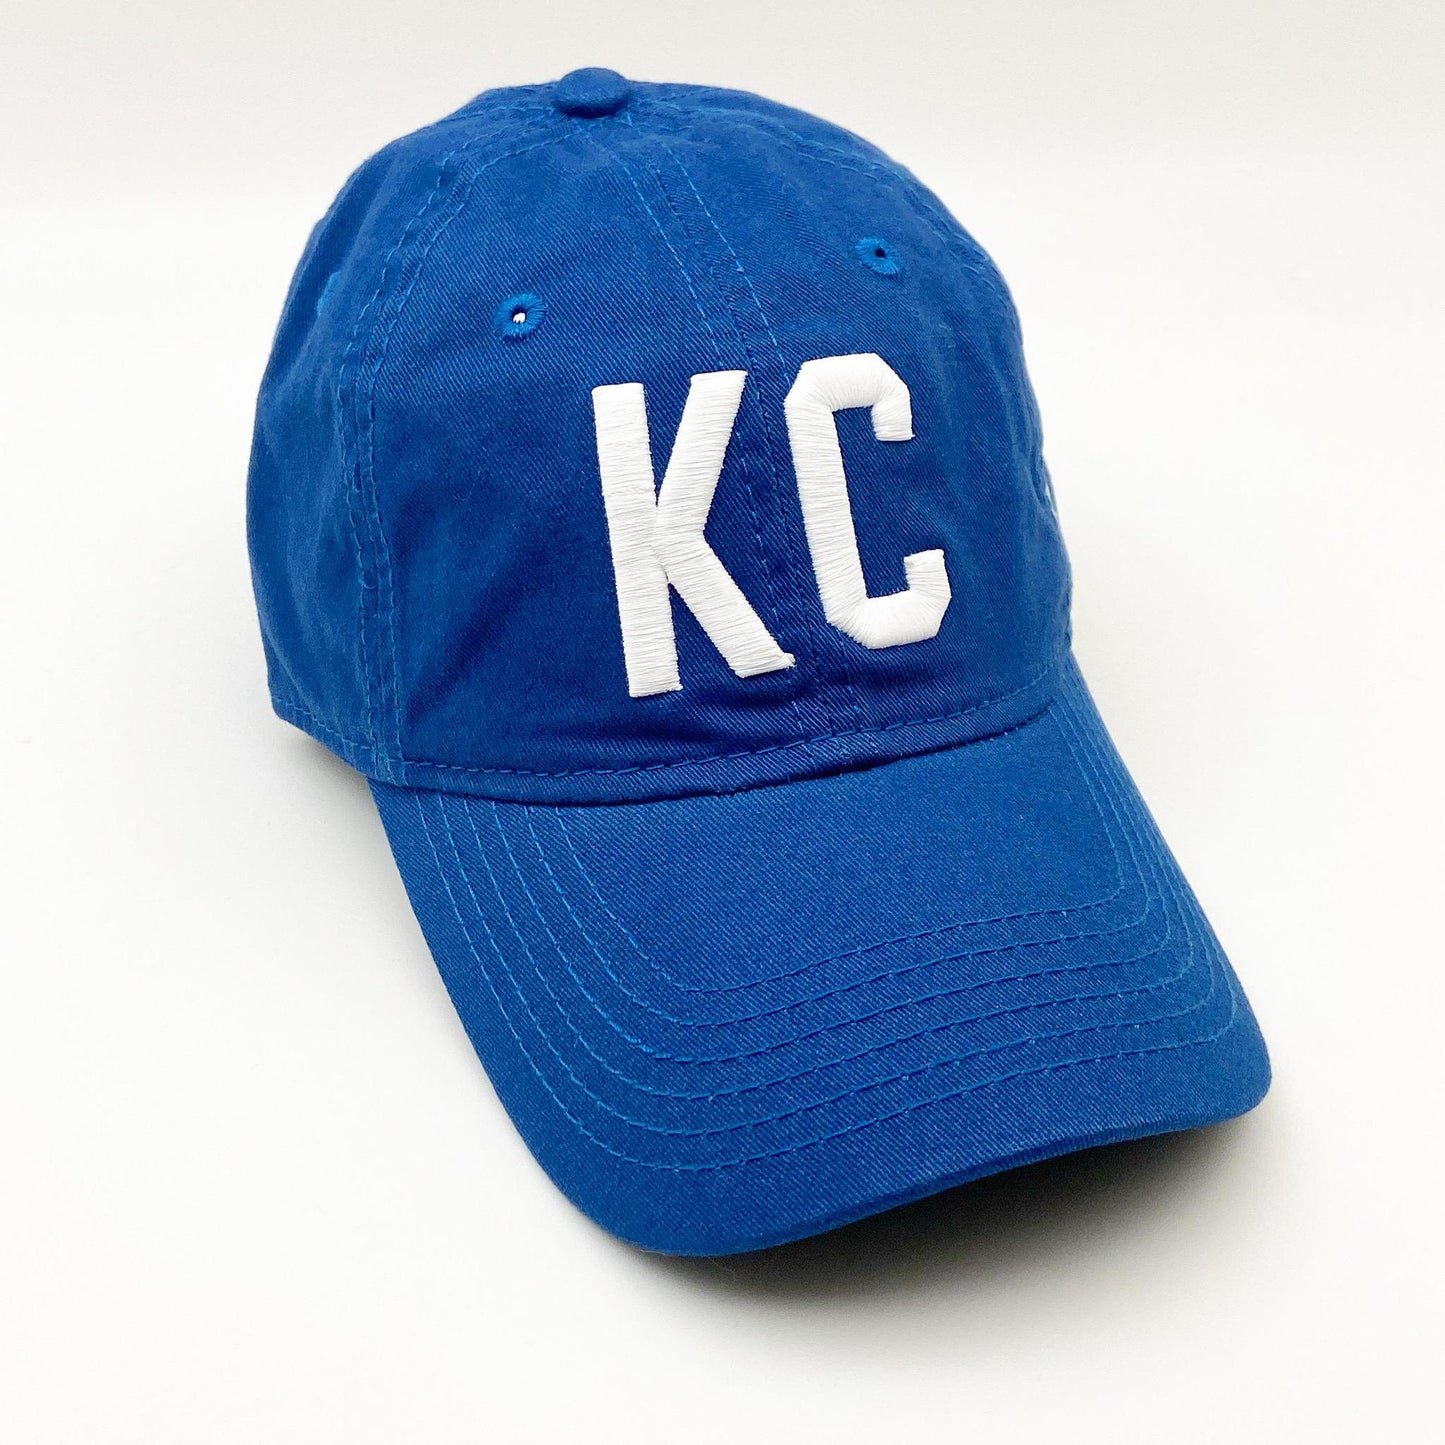 Ballcap - KC - White on Bright Blue